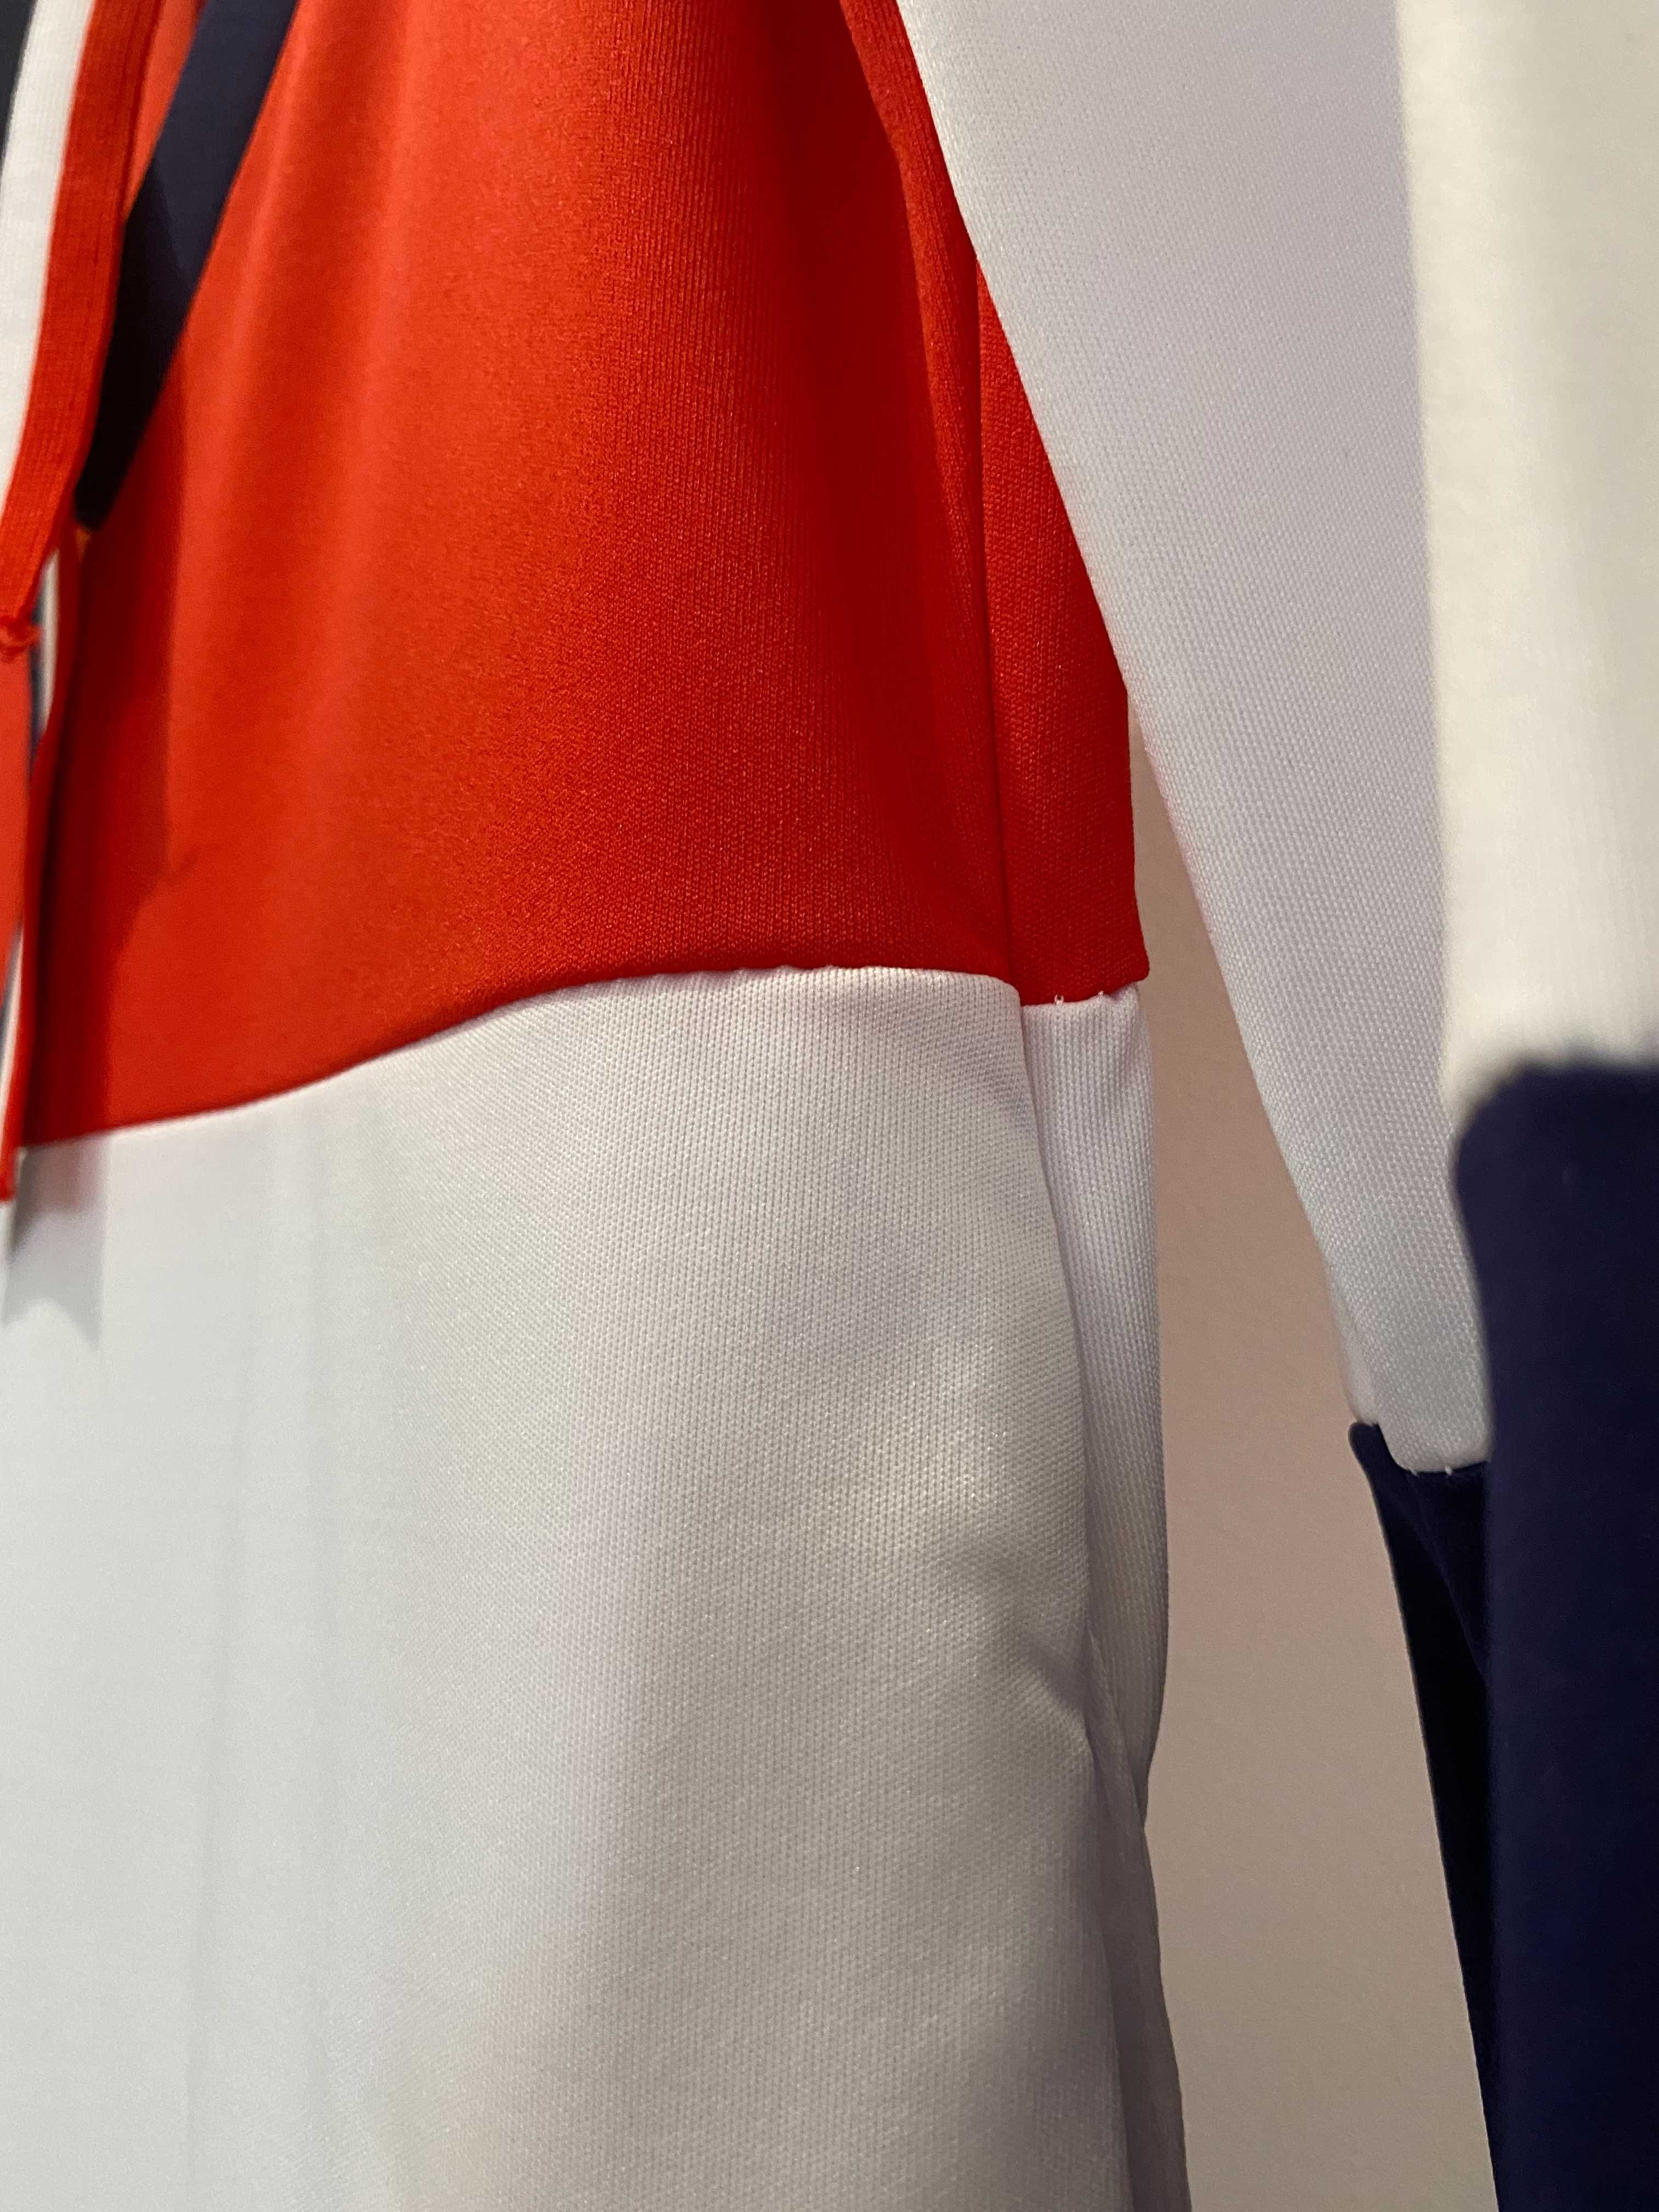 Tricou lung/rochie de vara, subtire, nou, marime S, rosu+alb+bleumarin